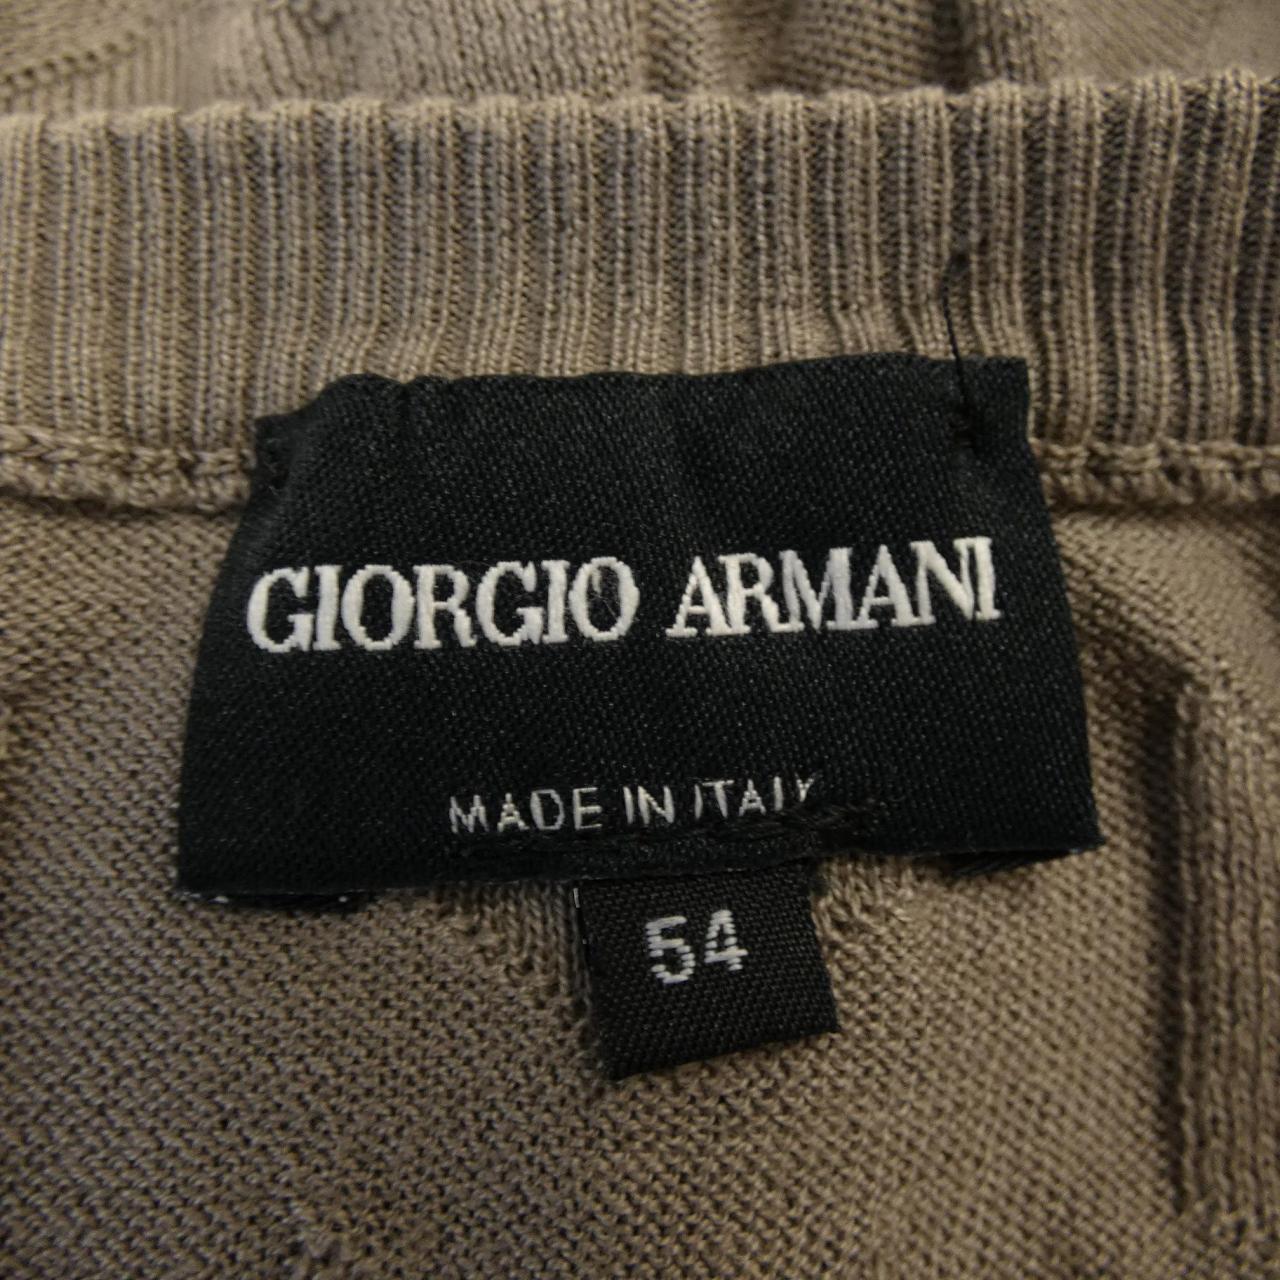 Giorgio Armani GIORGIO ARMANI knit